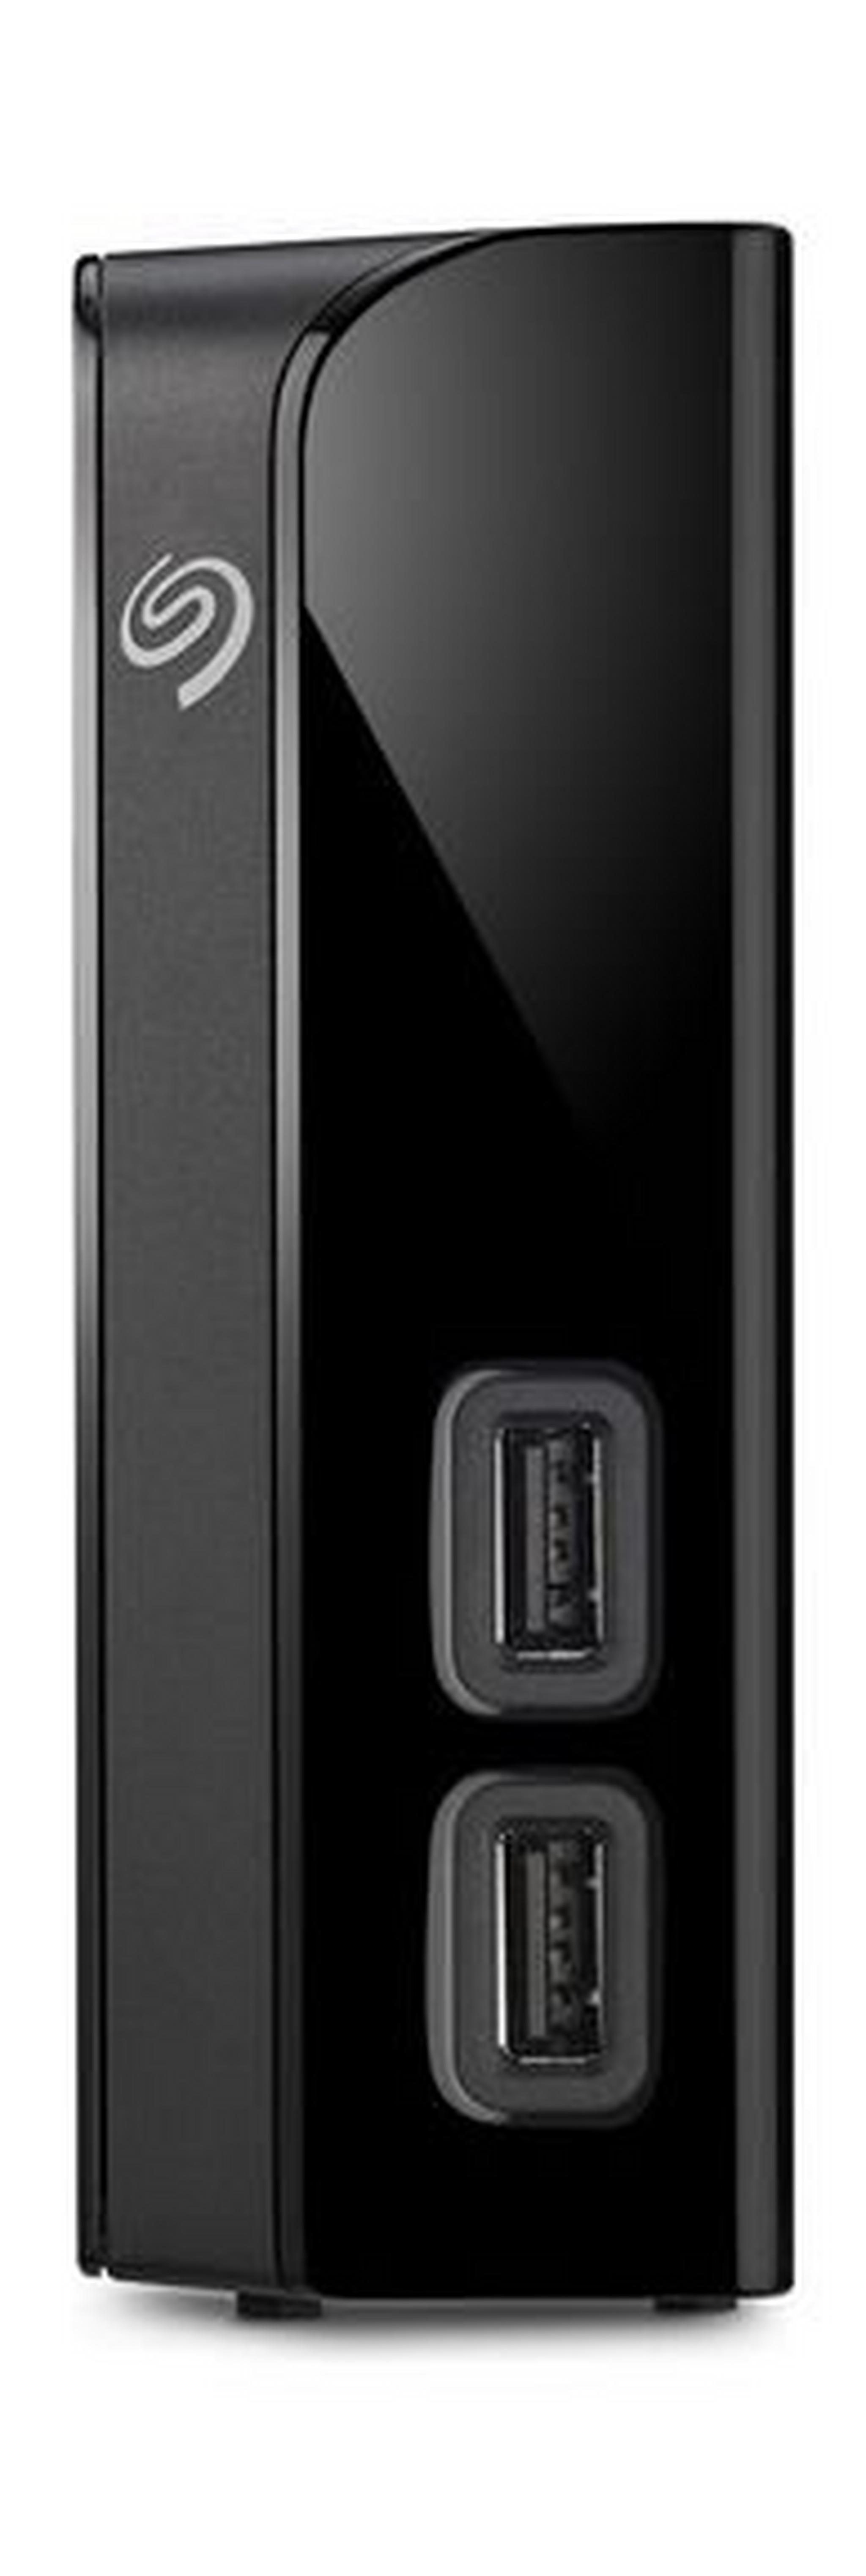 Seagate 4TB Backup Plus USB 3.0 External Hard Drive With USB Hub - Black